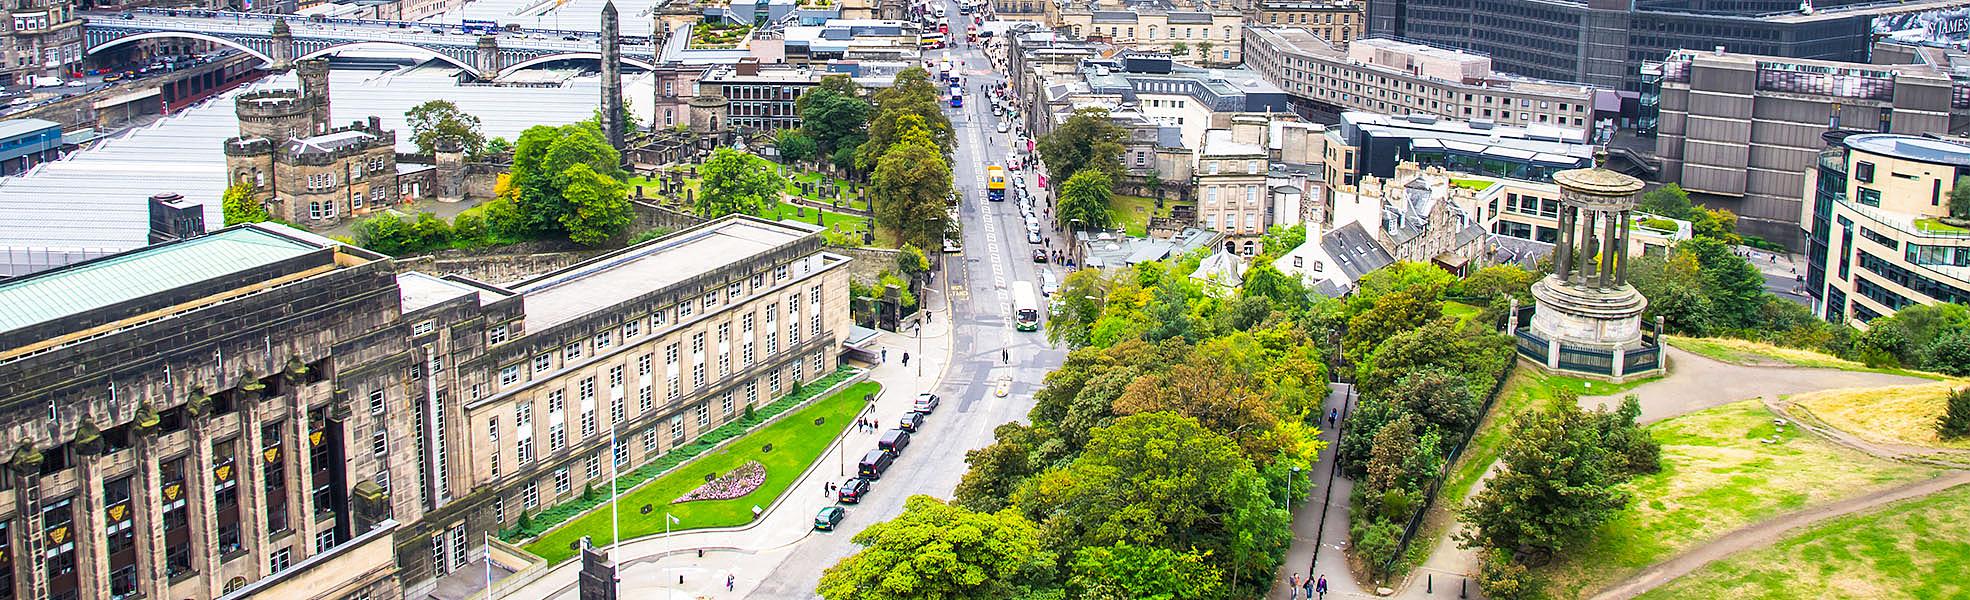 Edinburgh City View